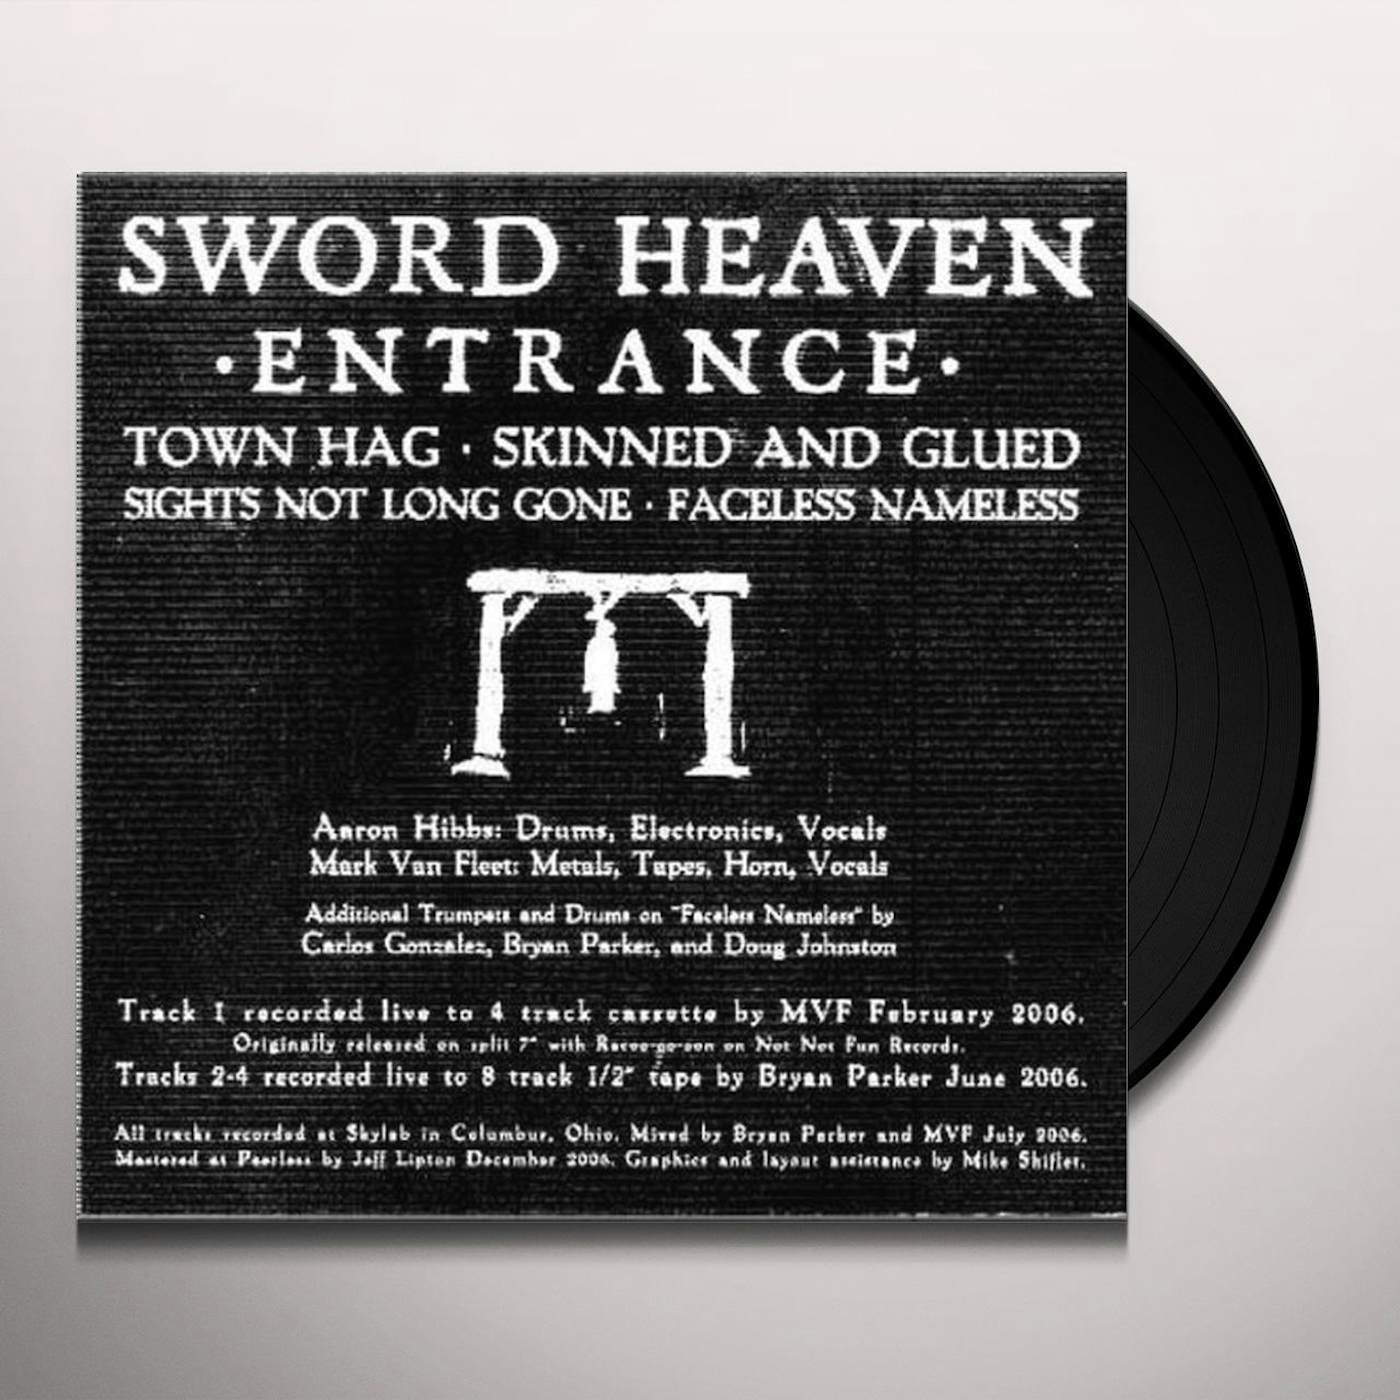 Sword Heaven ENTRANCE Vinyl Record